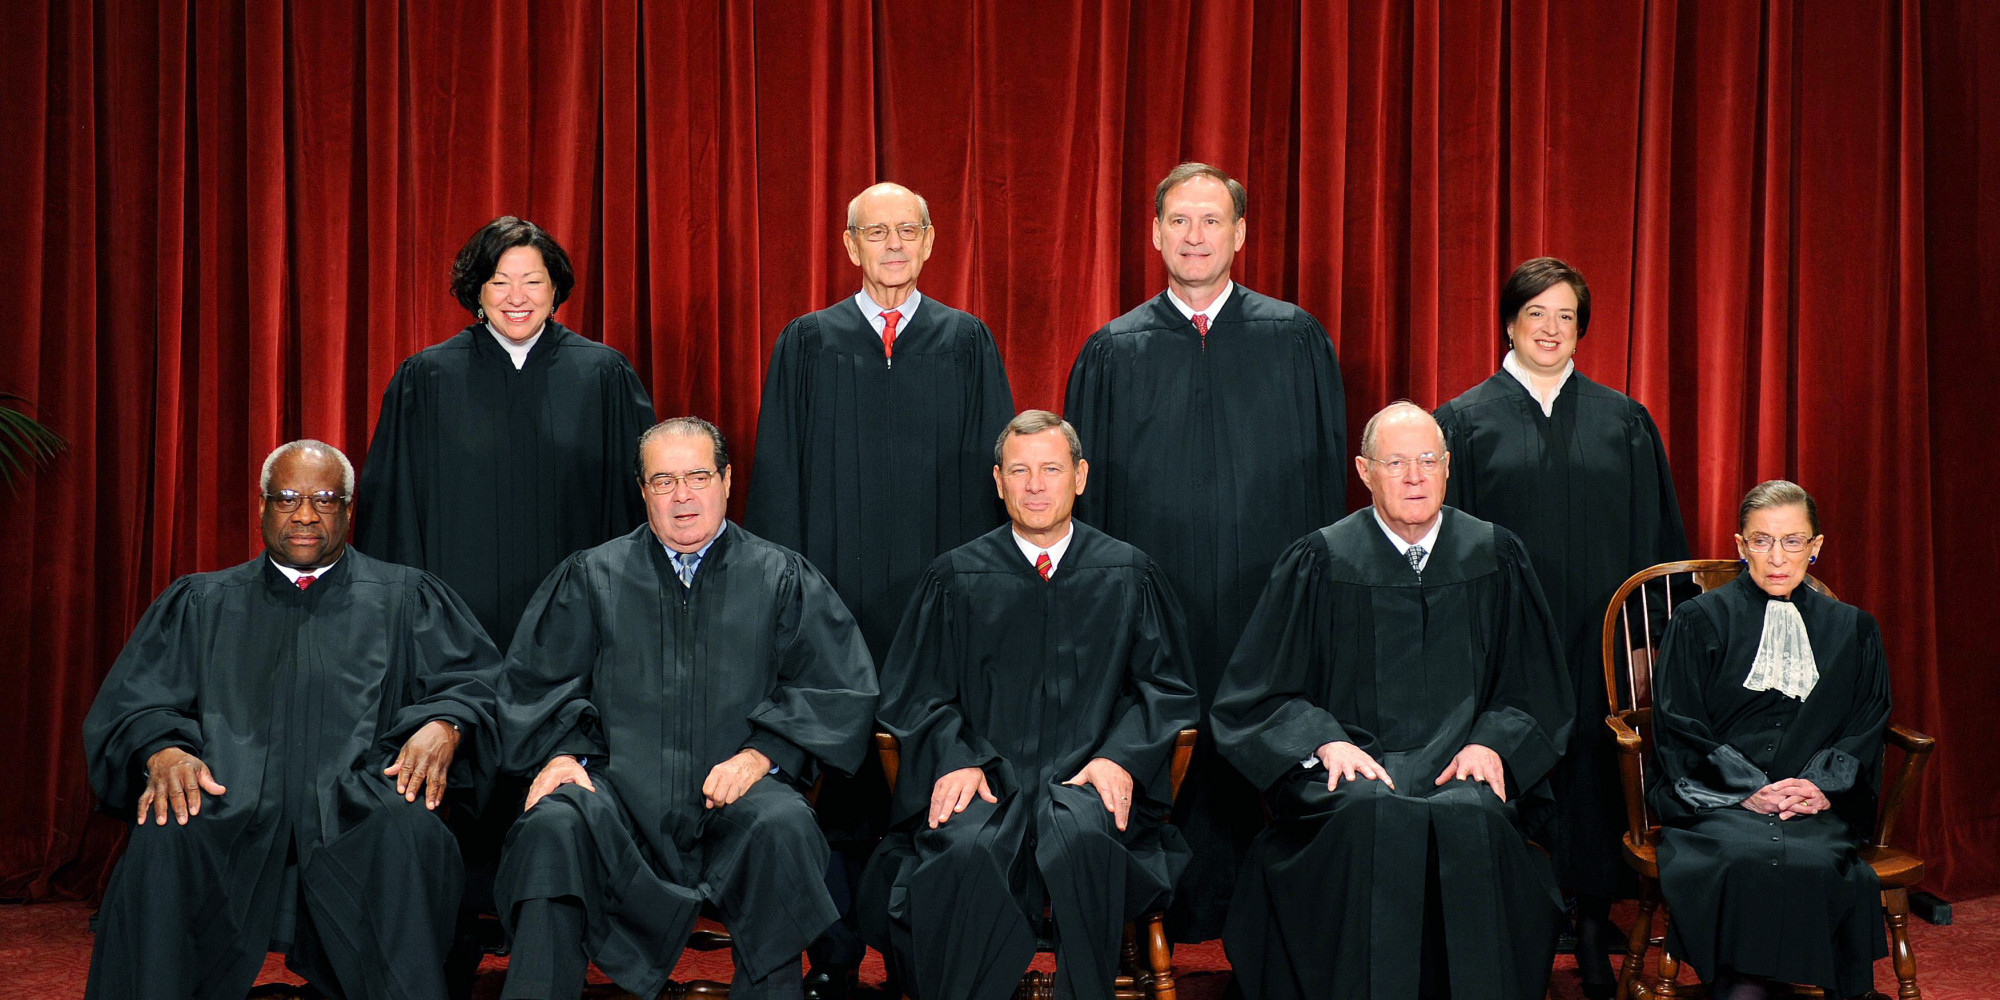 United States Supreme Court 2014